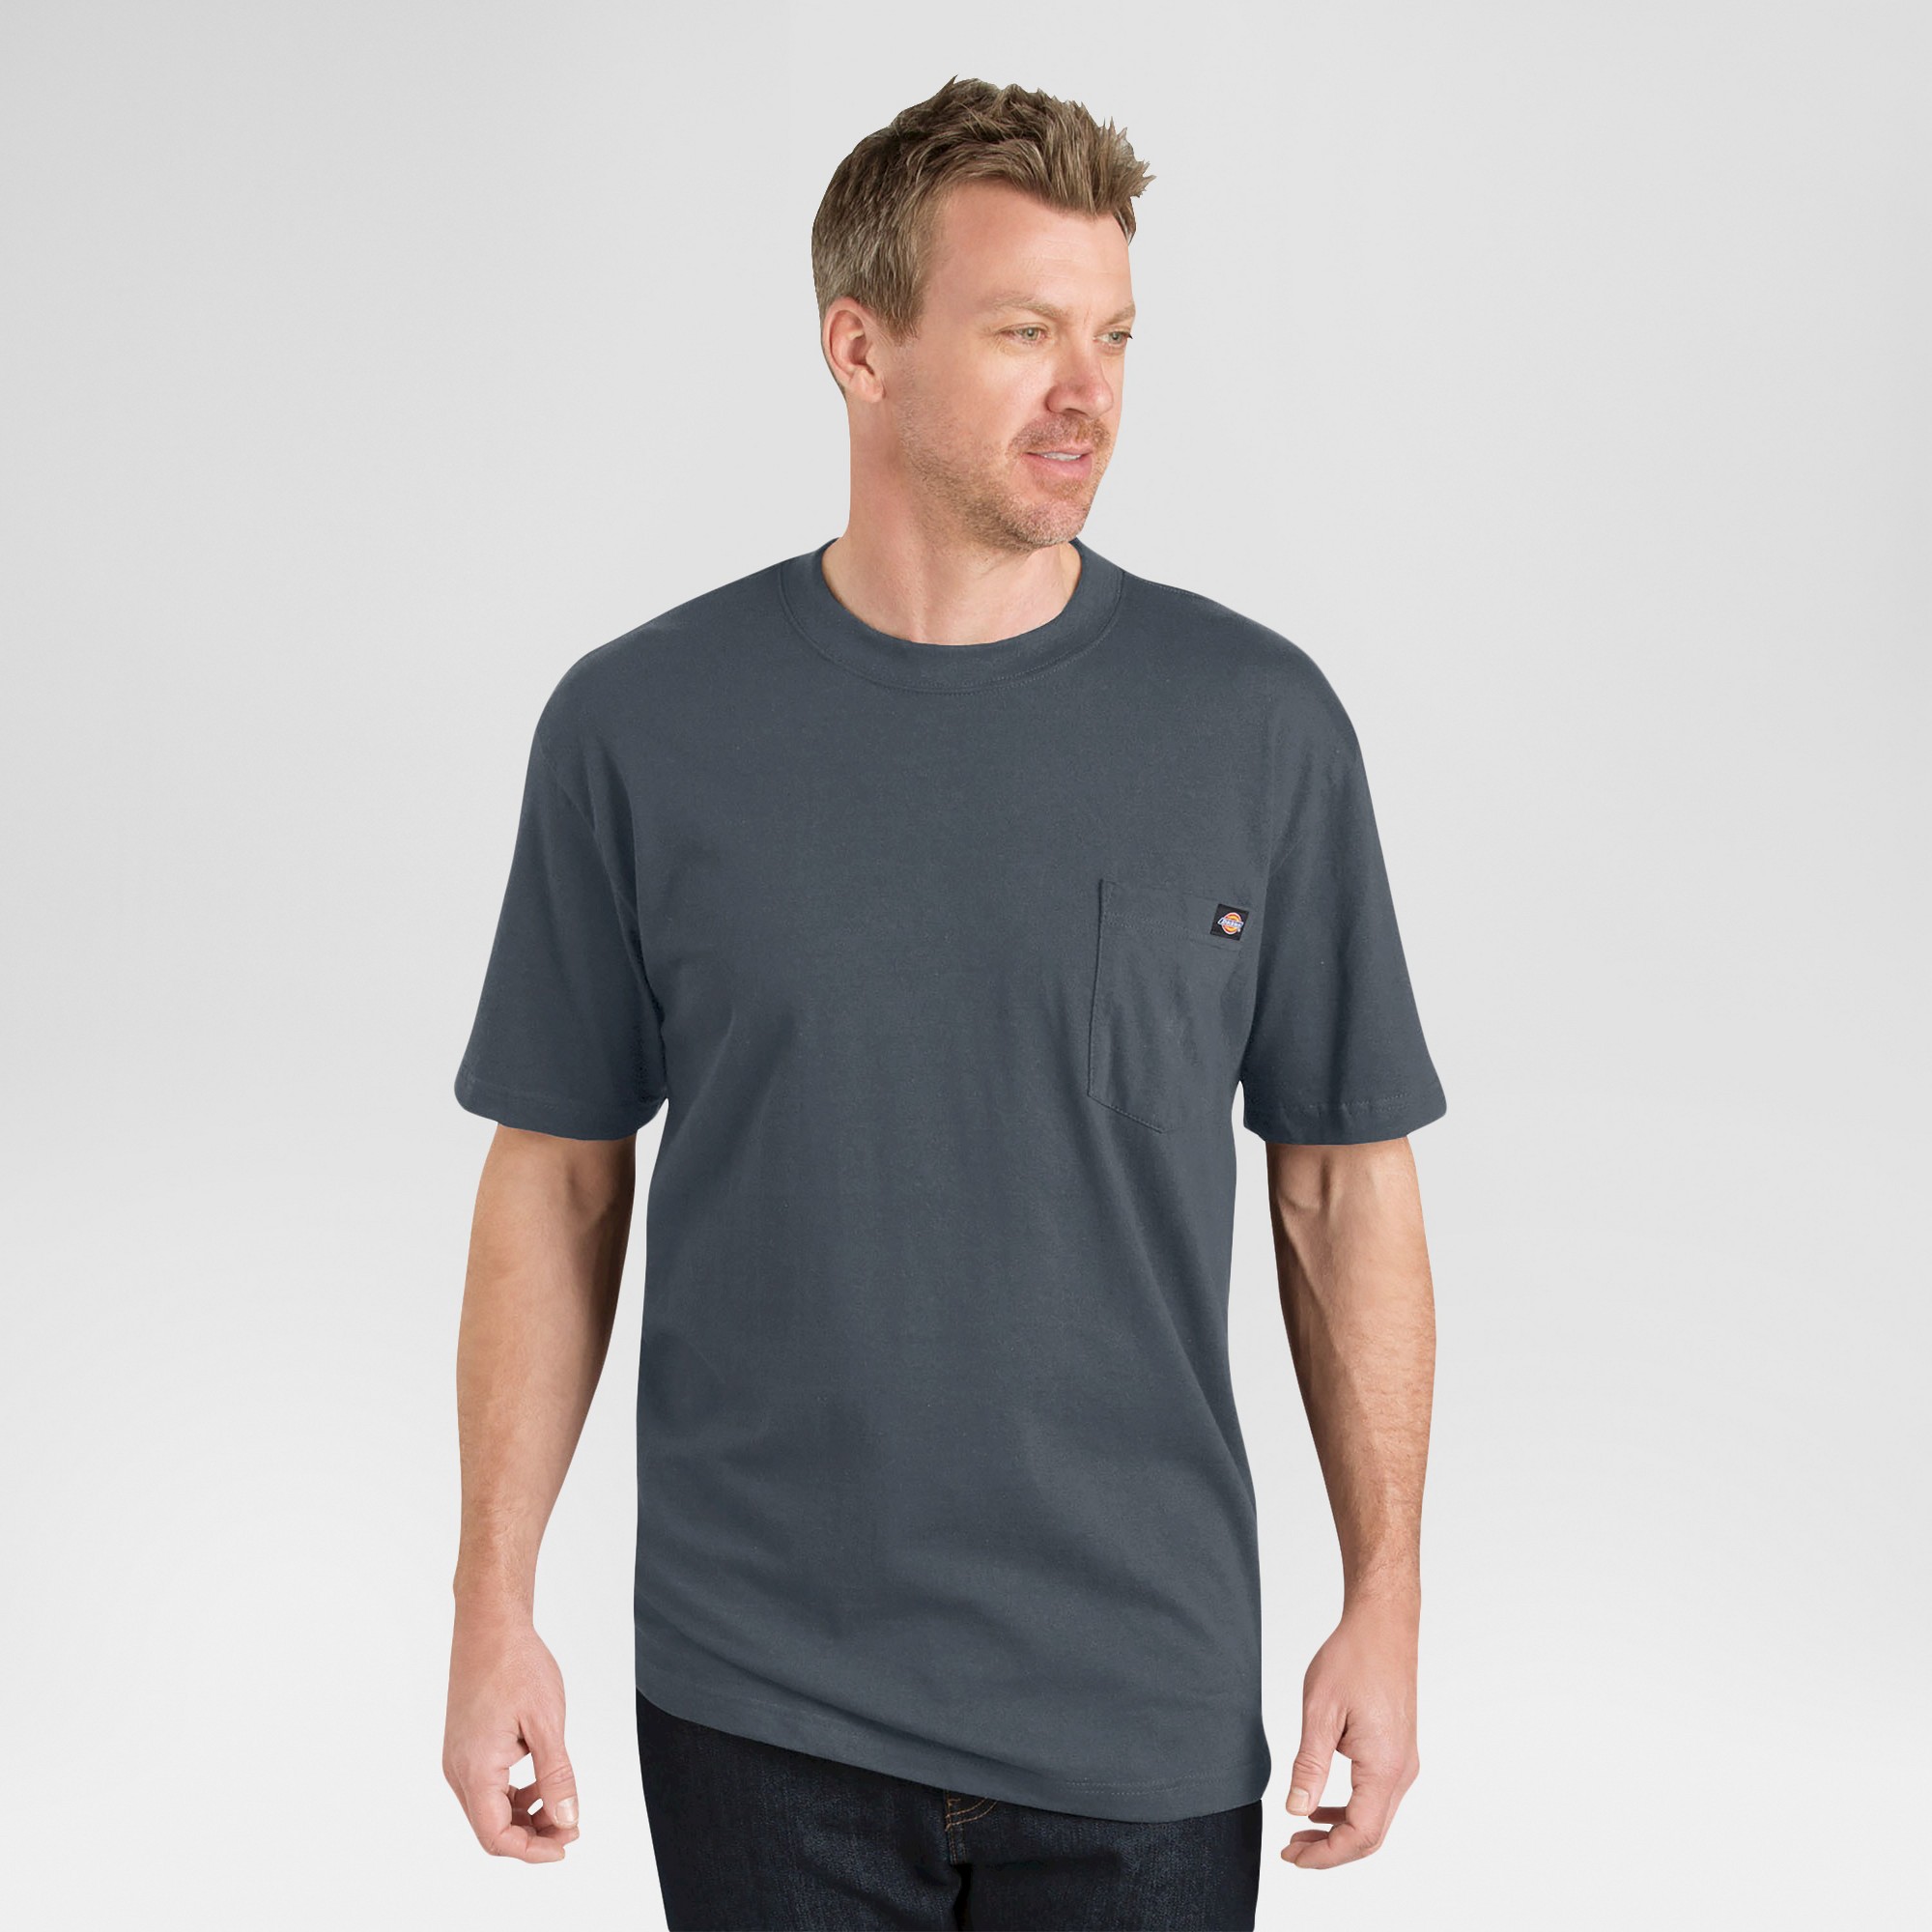 petiteDickies Men's Big & Tall 2 Pack Cotton Short Sleeve Pocket T-Shirt- Charcoal XXXL, Grey